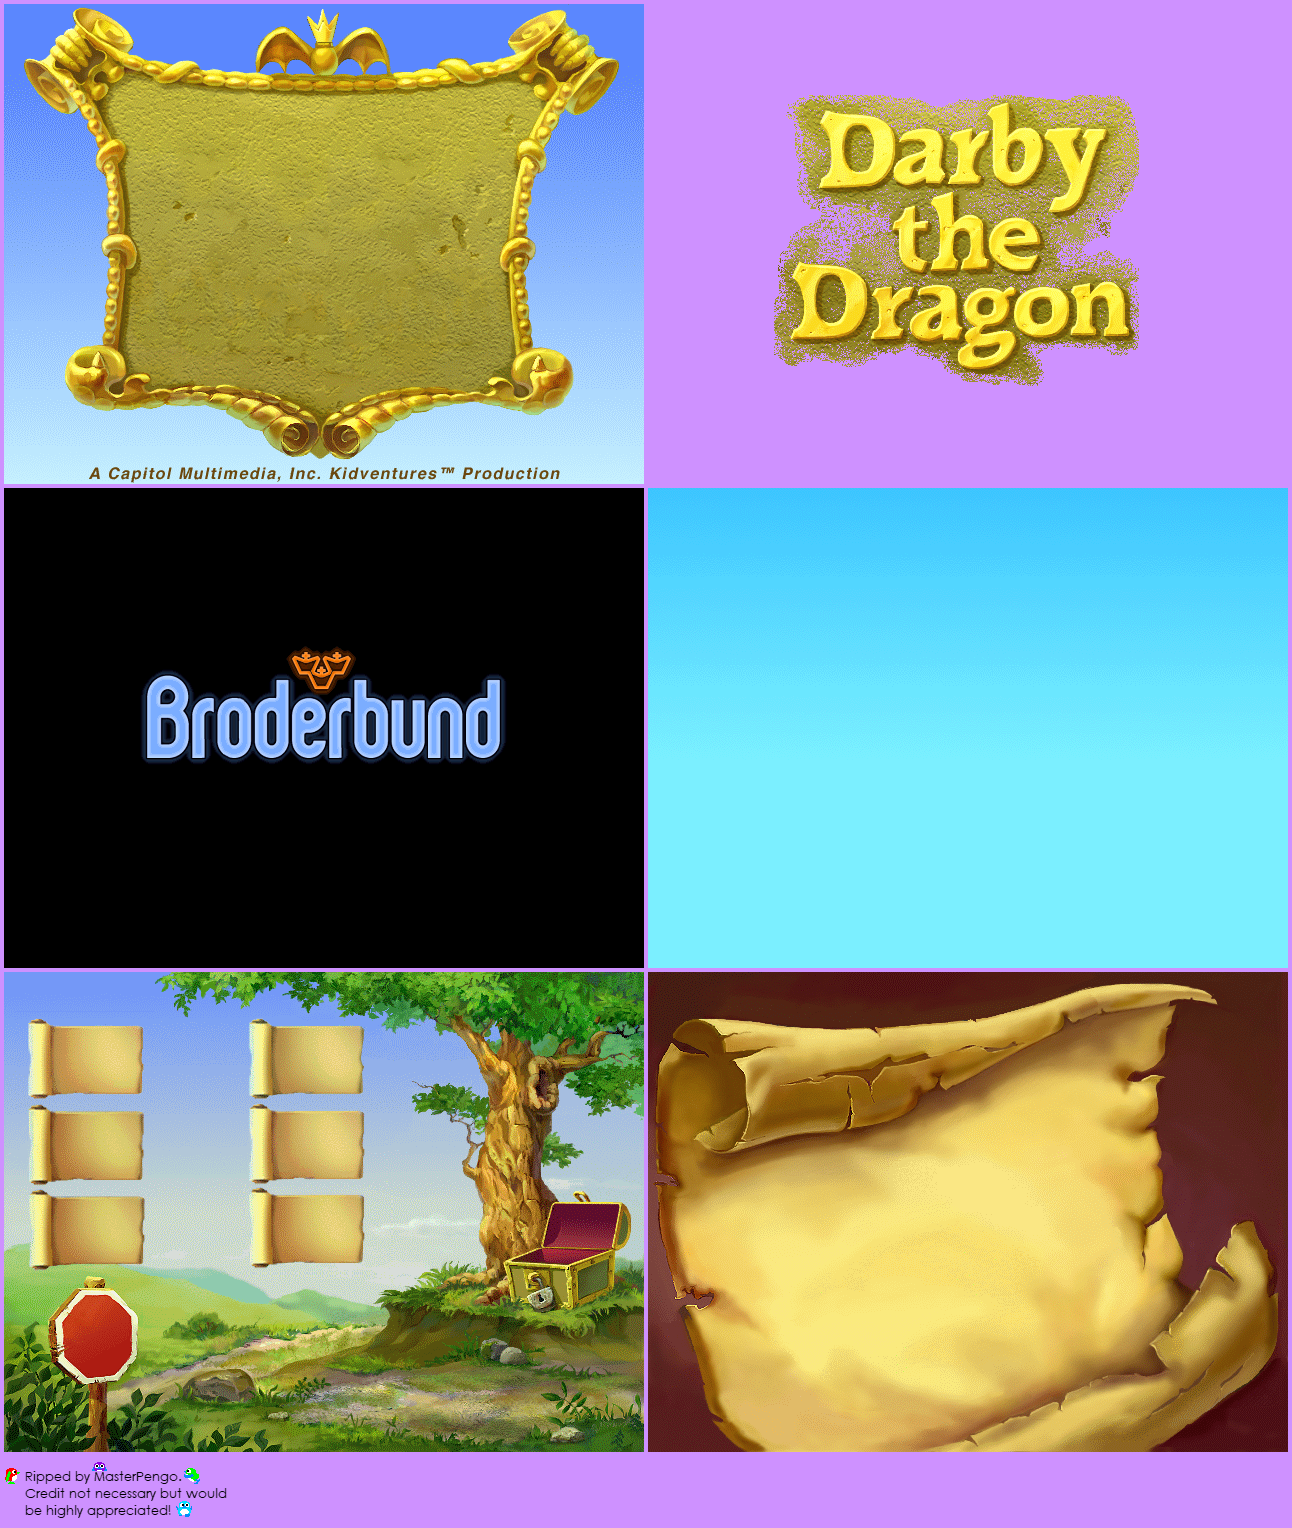 Darby the Dragon - Menus and Logos